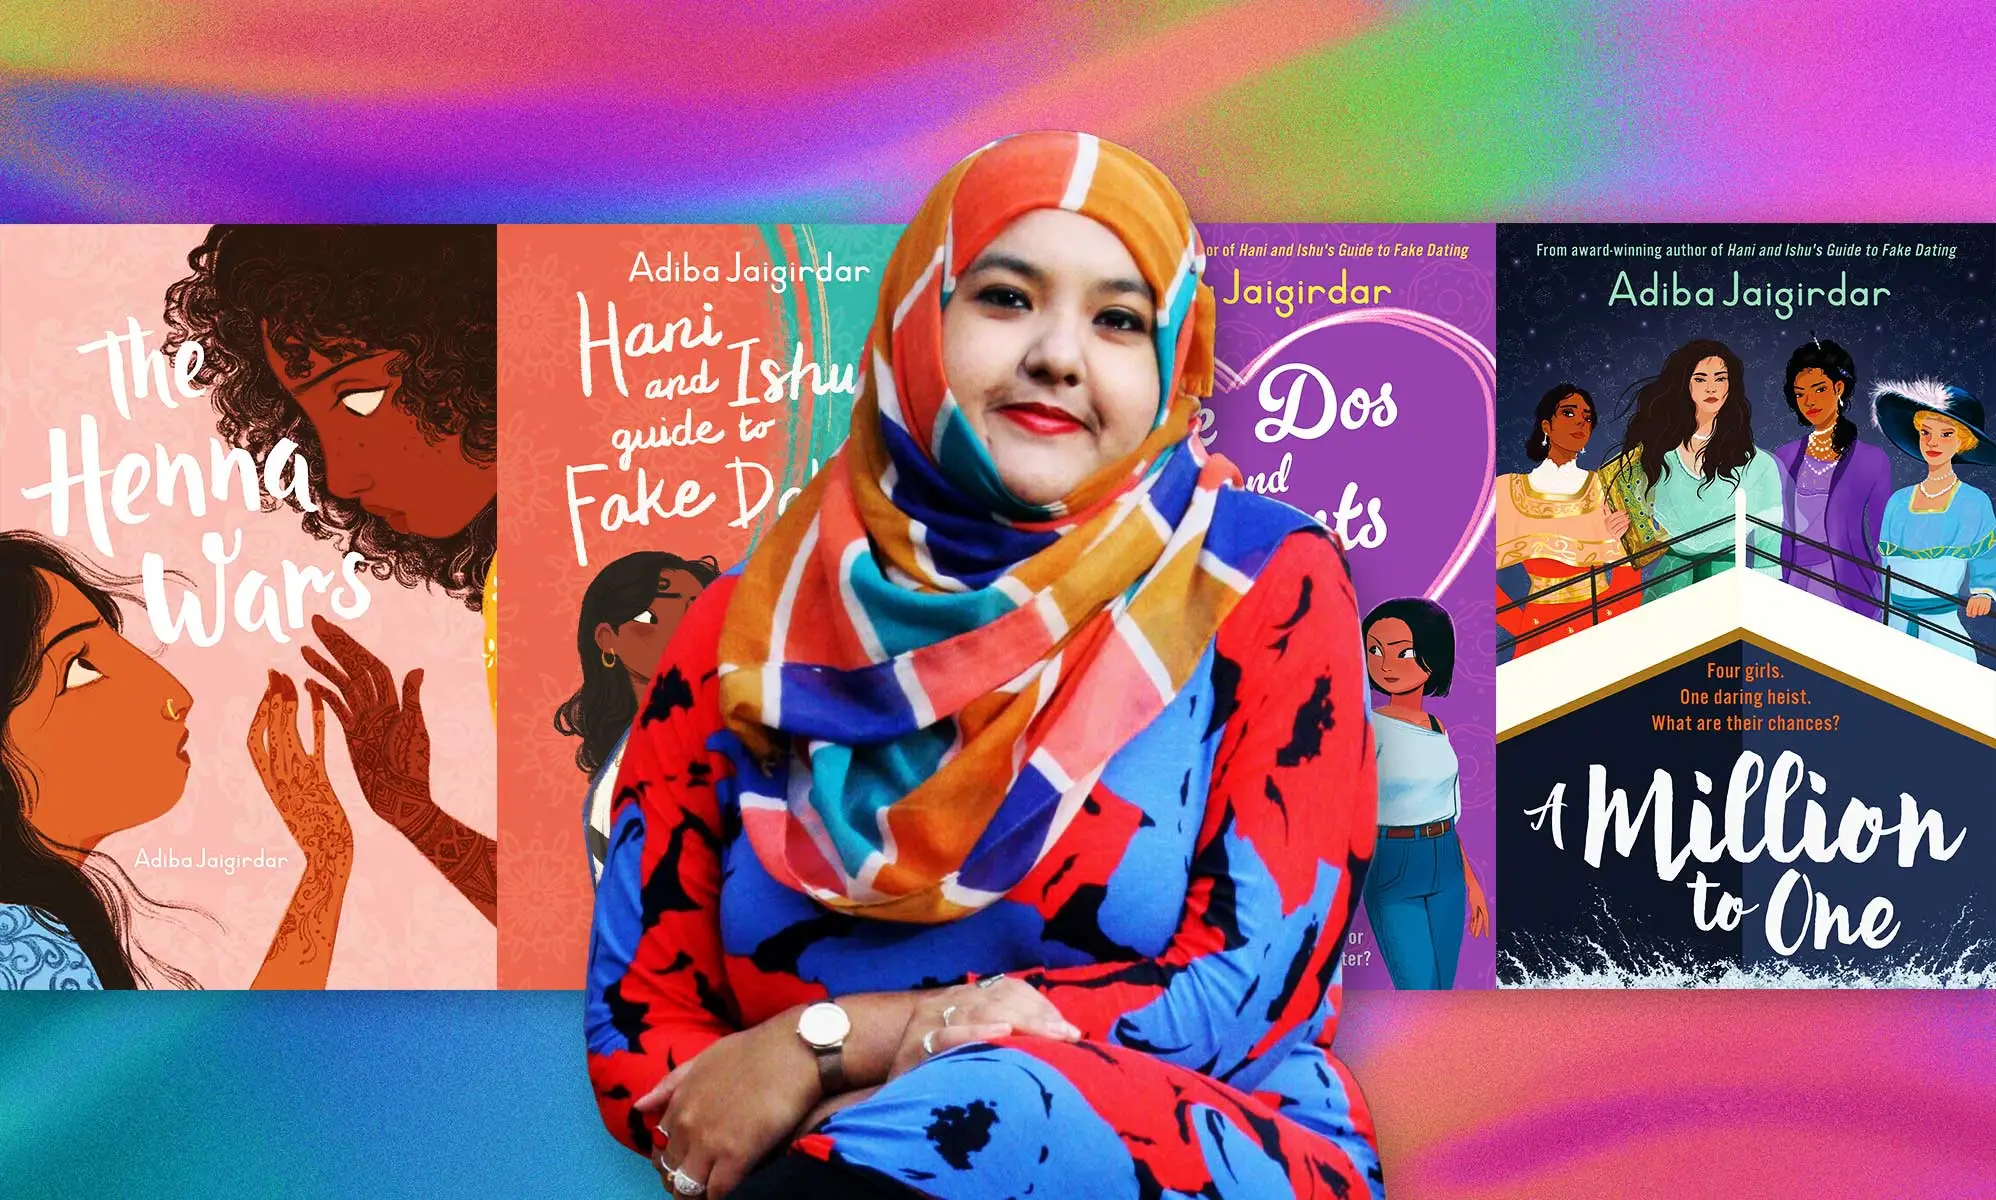 Author Adiba Jaigirdar on embracing LGBTQ+ Muslim stories